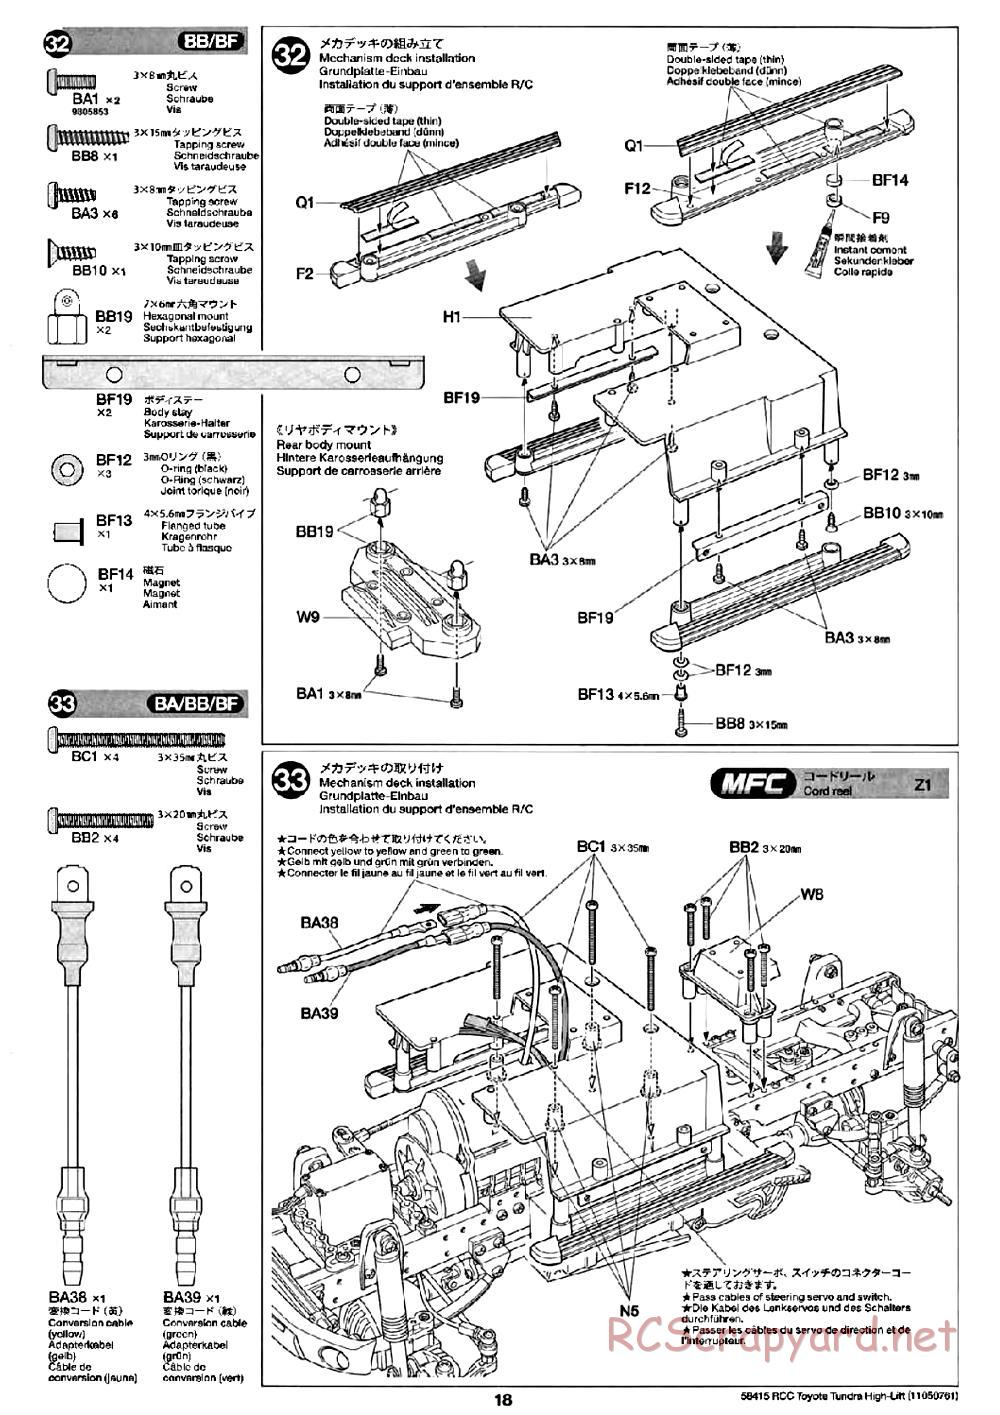 Tamiya - Toyota Tundra High-Lift Chassis - Manual - Page 18